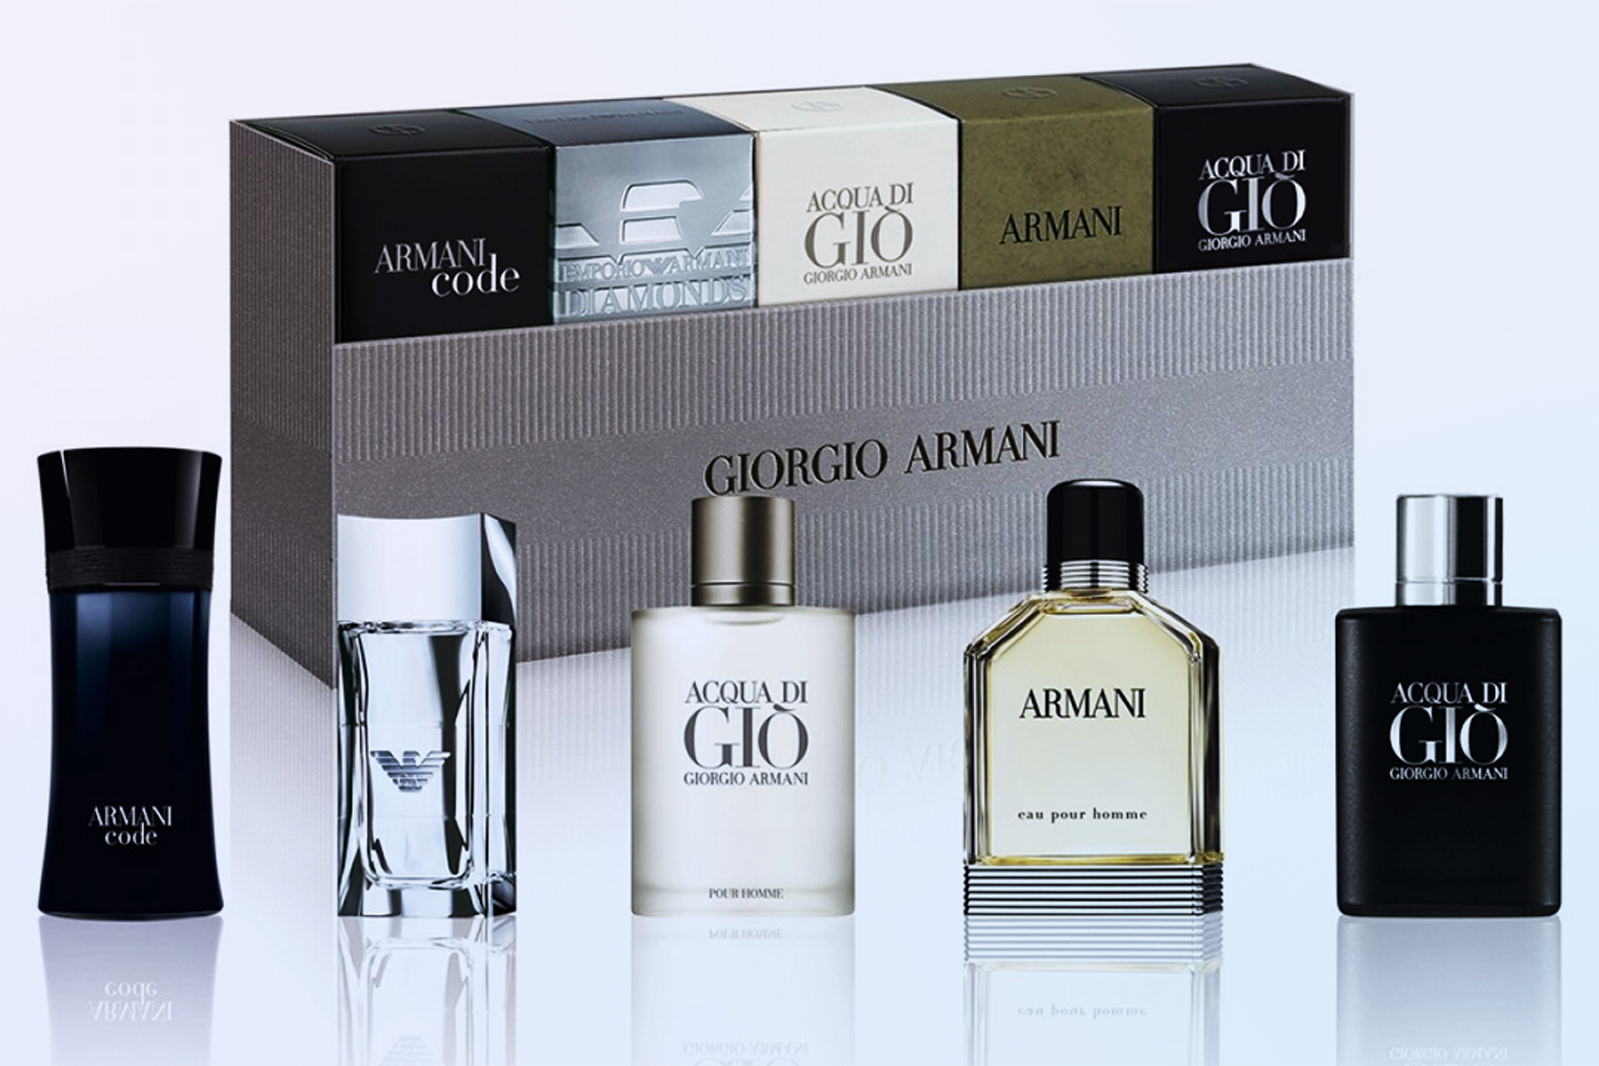 Giorgio Armani and its exclusive cologne collection for men - GlamorX